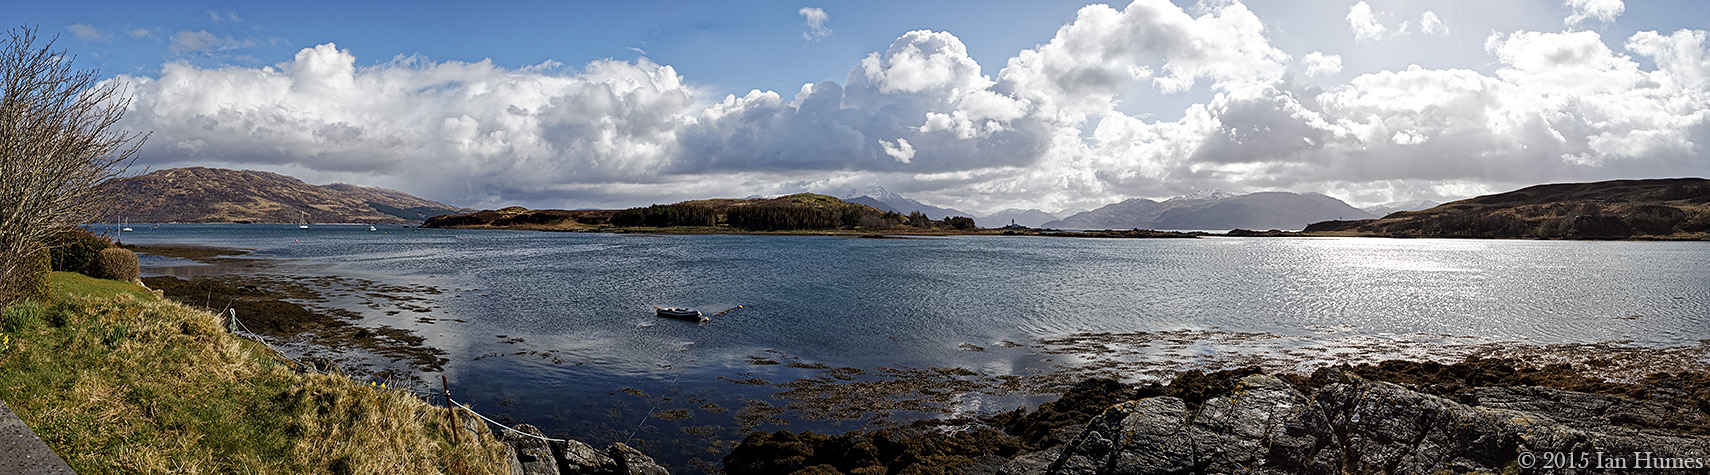 Isle of Ornsay - Skye